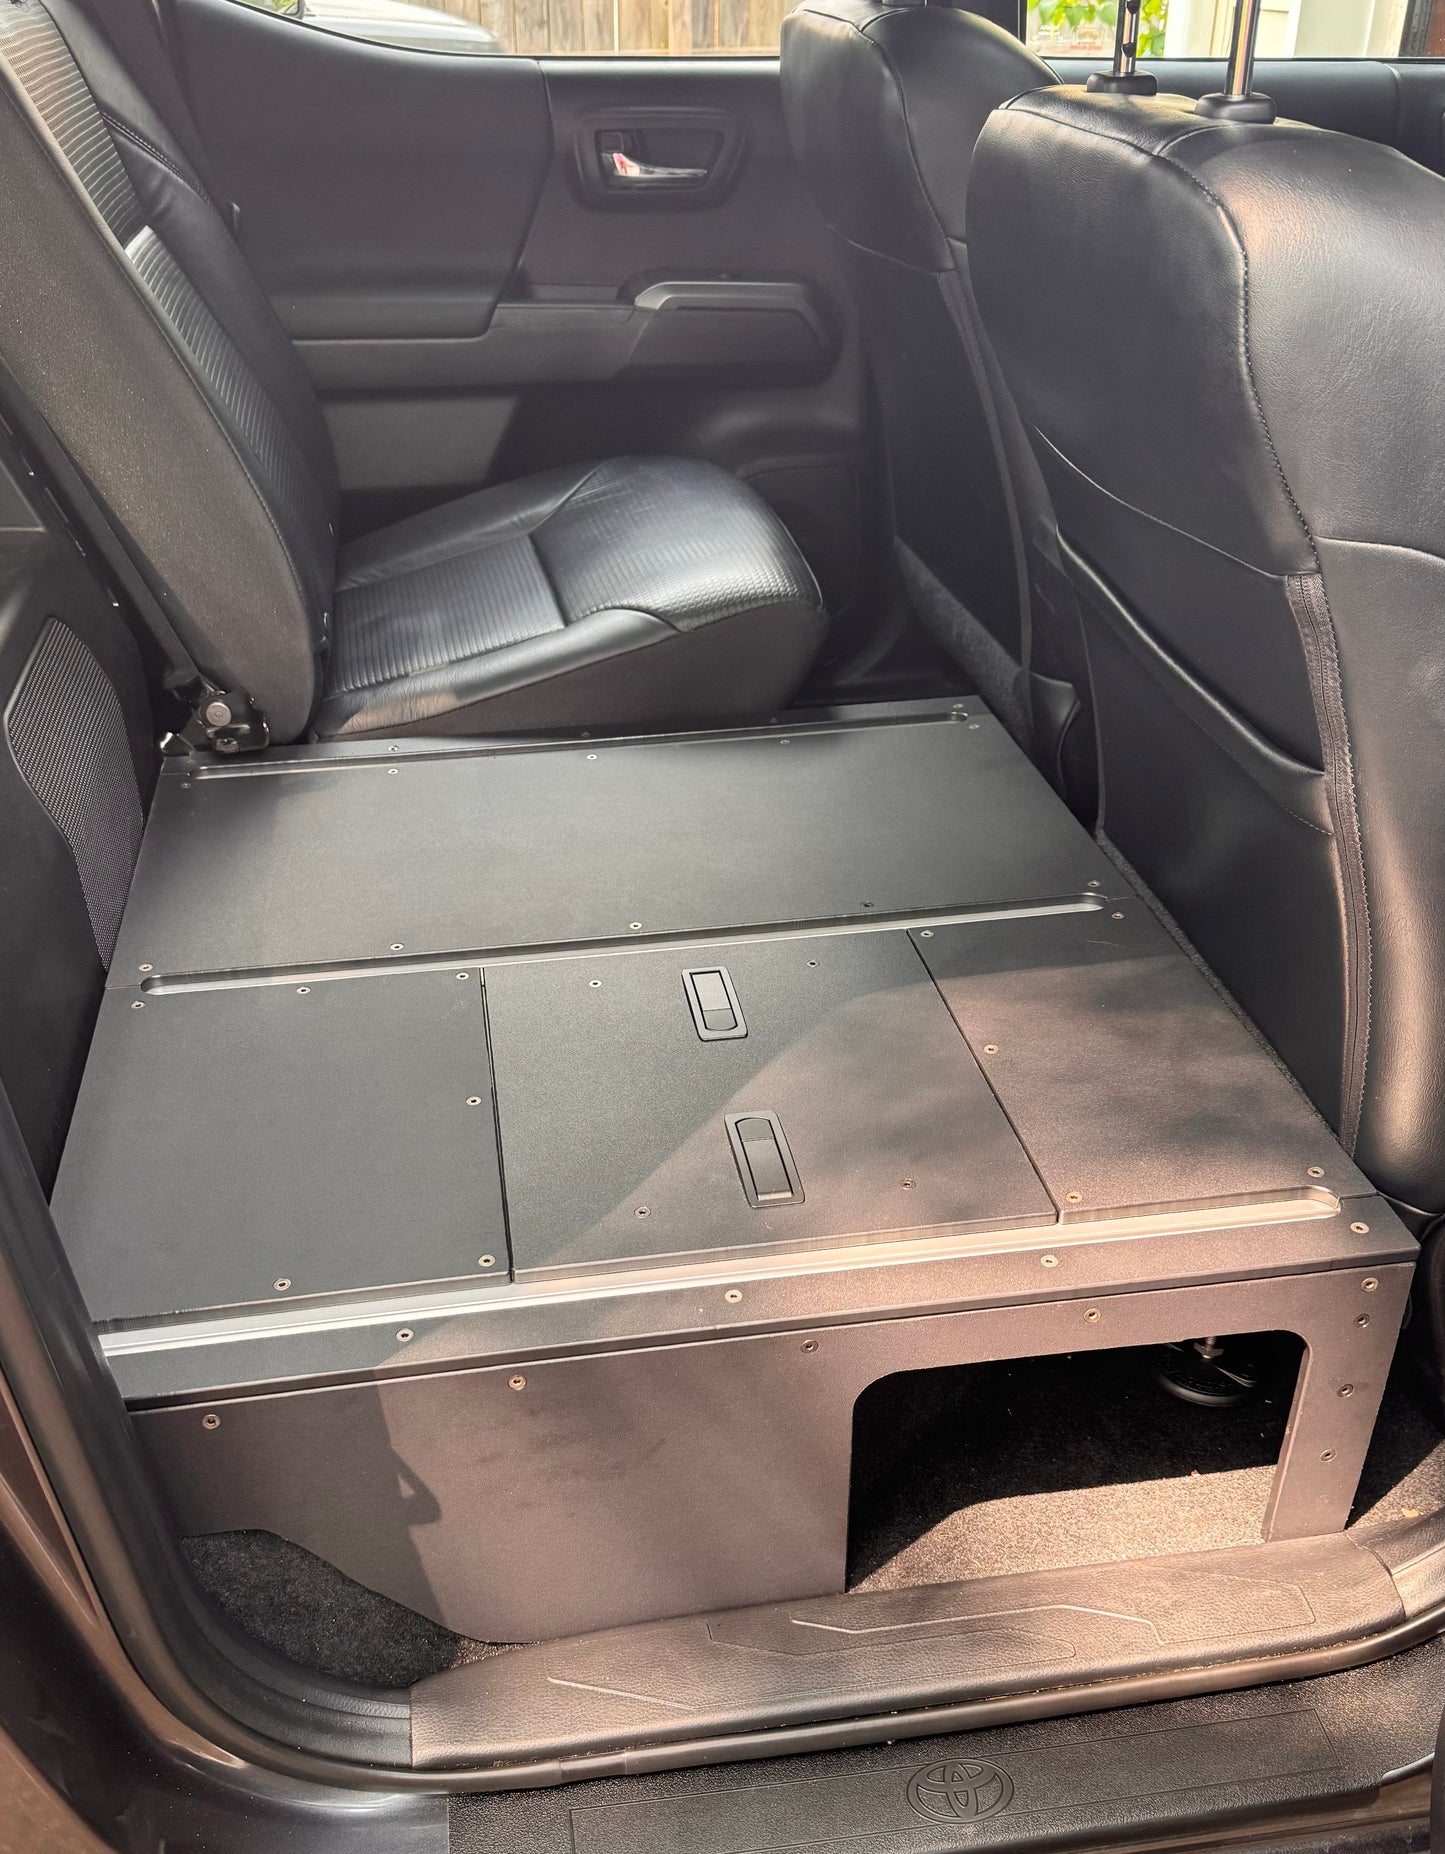 Toyota Tacoma 60% Rear Seat Delete Kit, converting the rear 60% seats into a cargo storage platform.